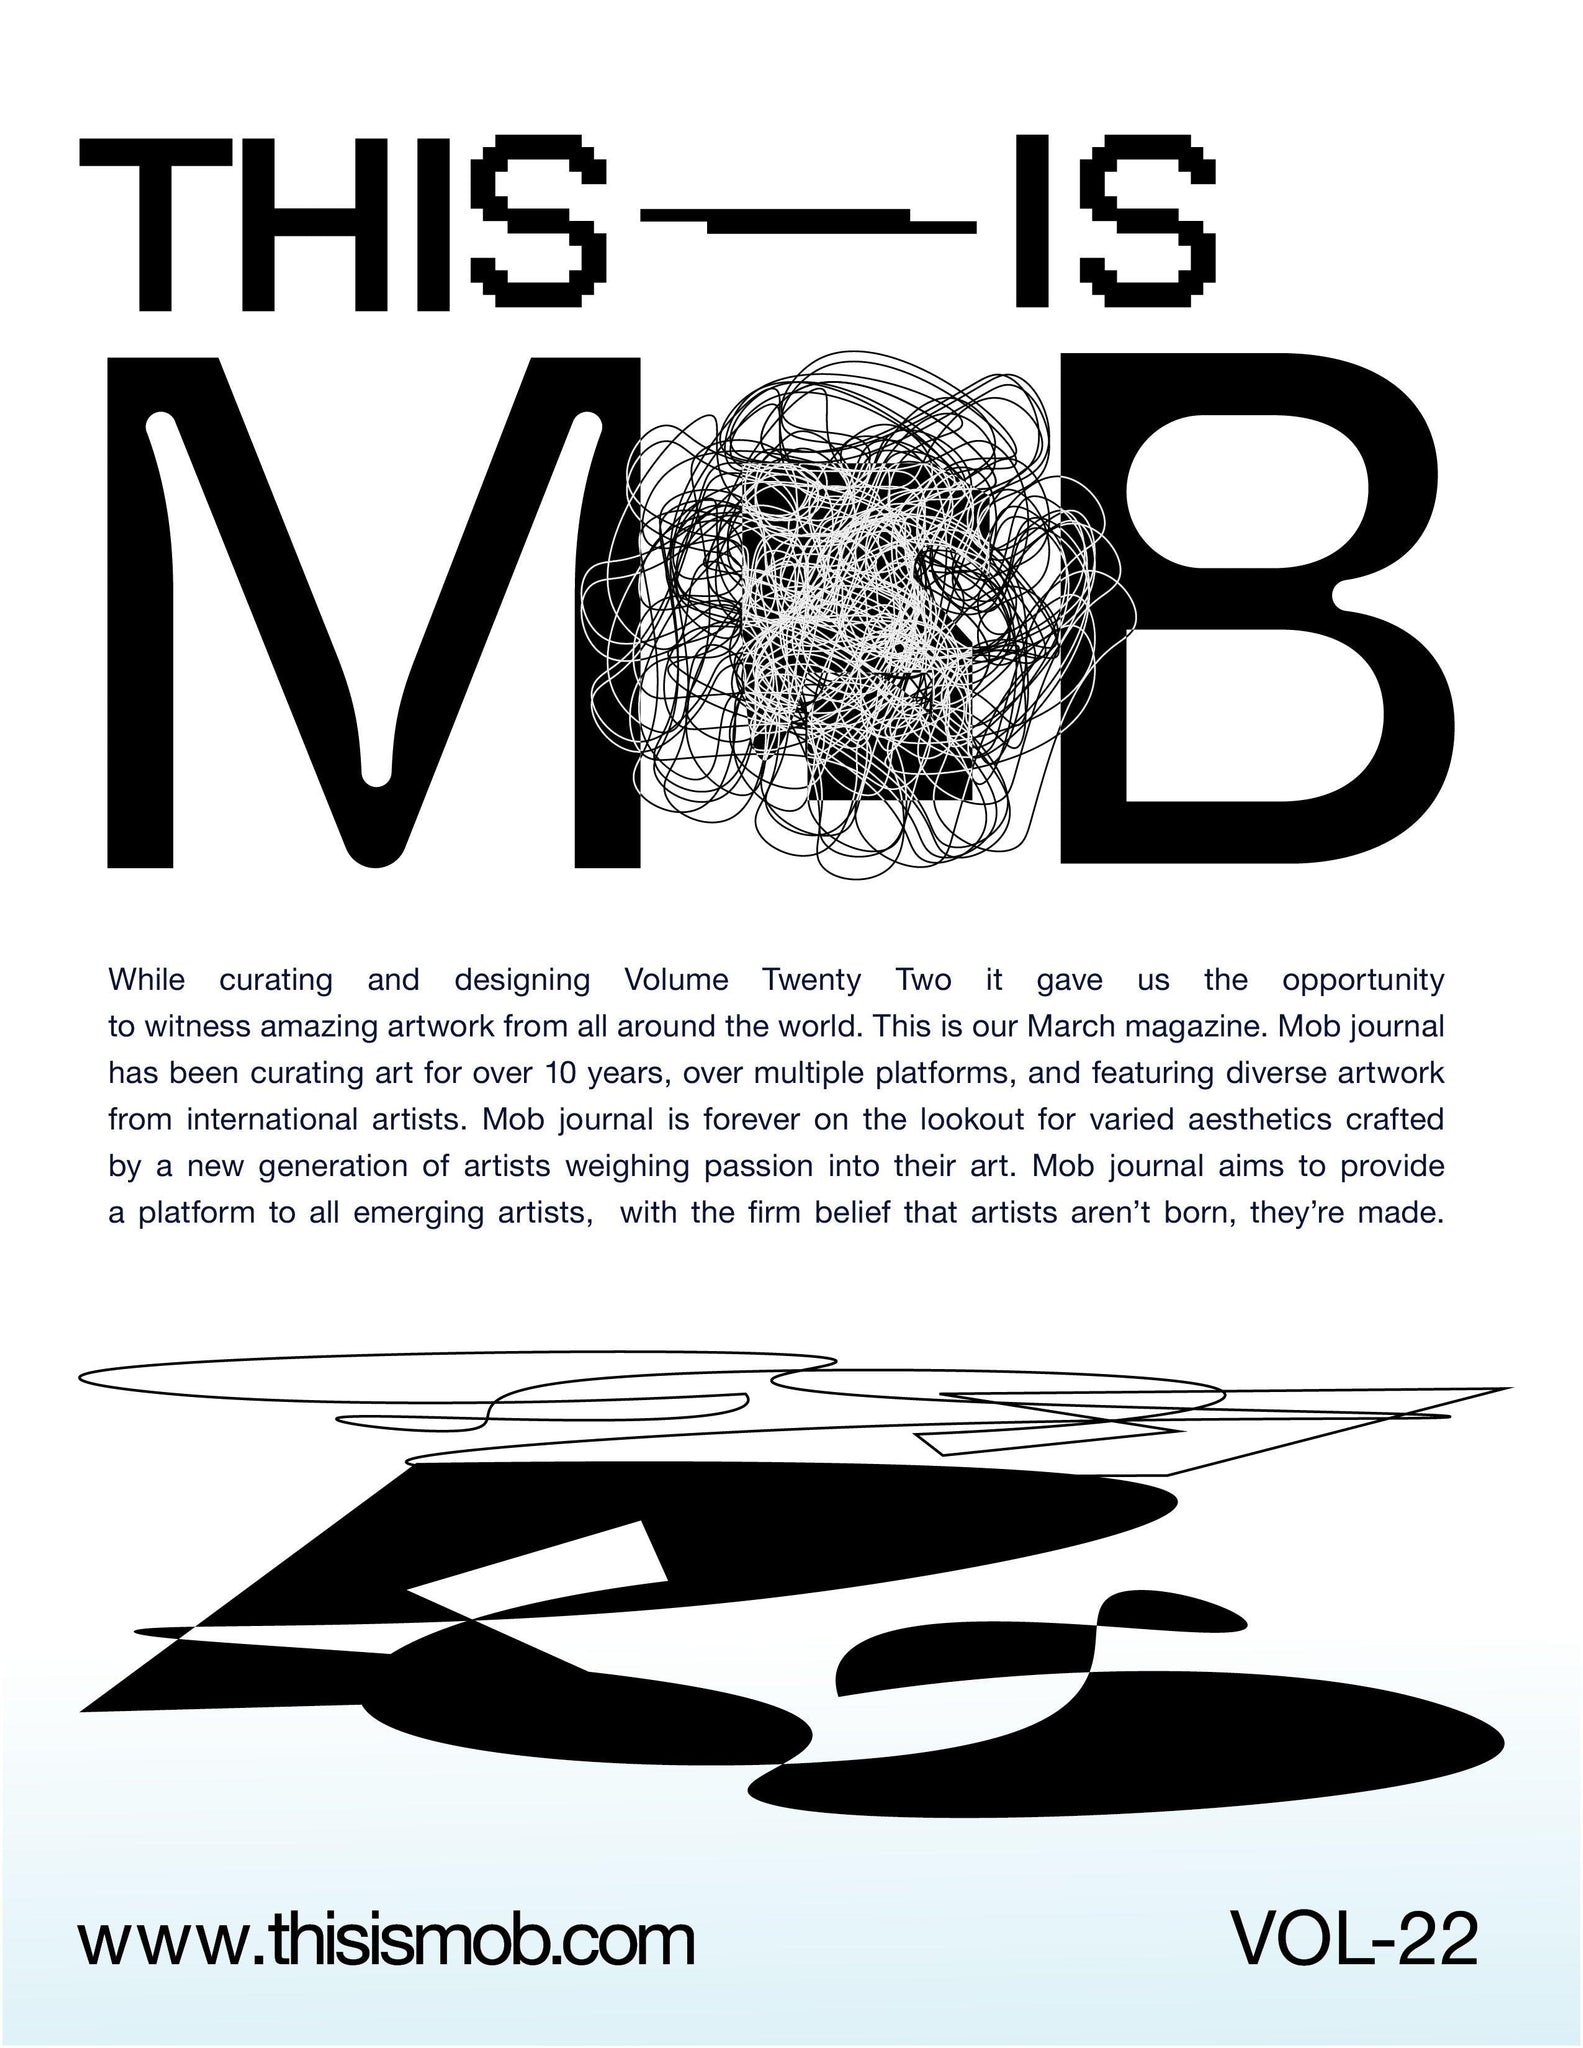 MOB JOURNAL | VOLUME TWENTY TWO | ISSUE #73 - Mob Journal